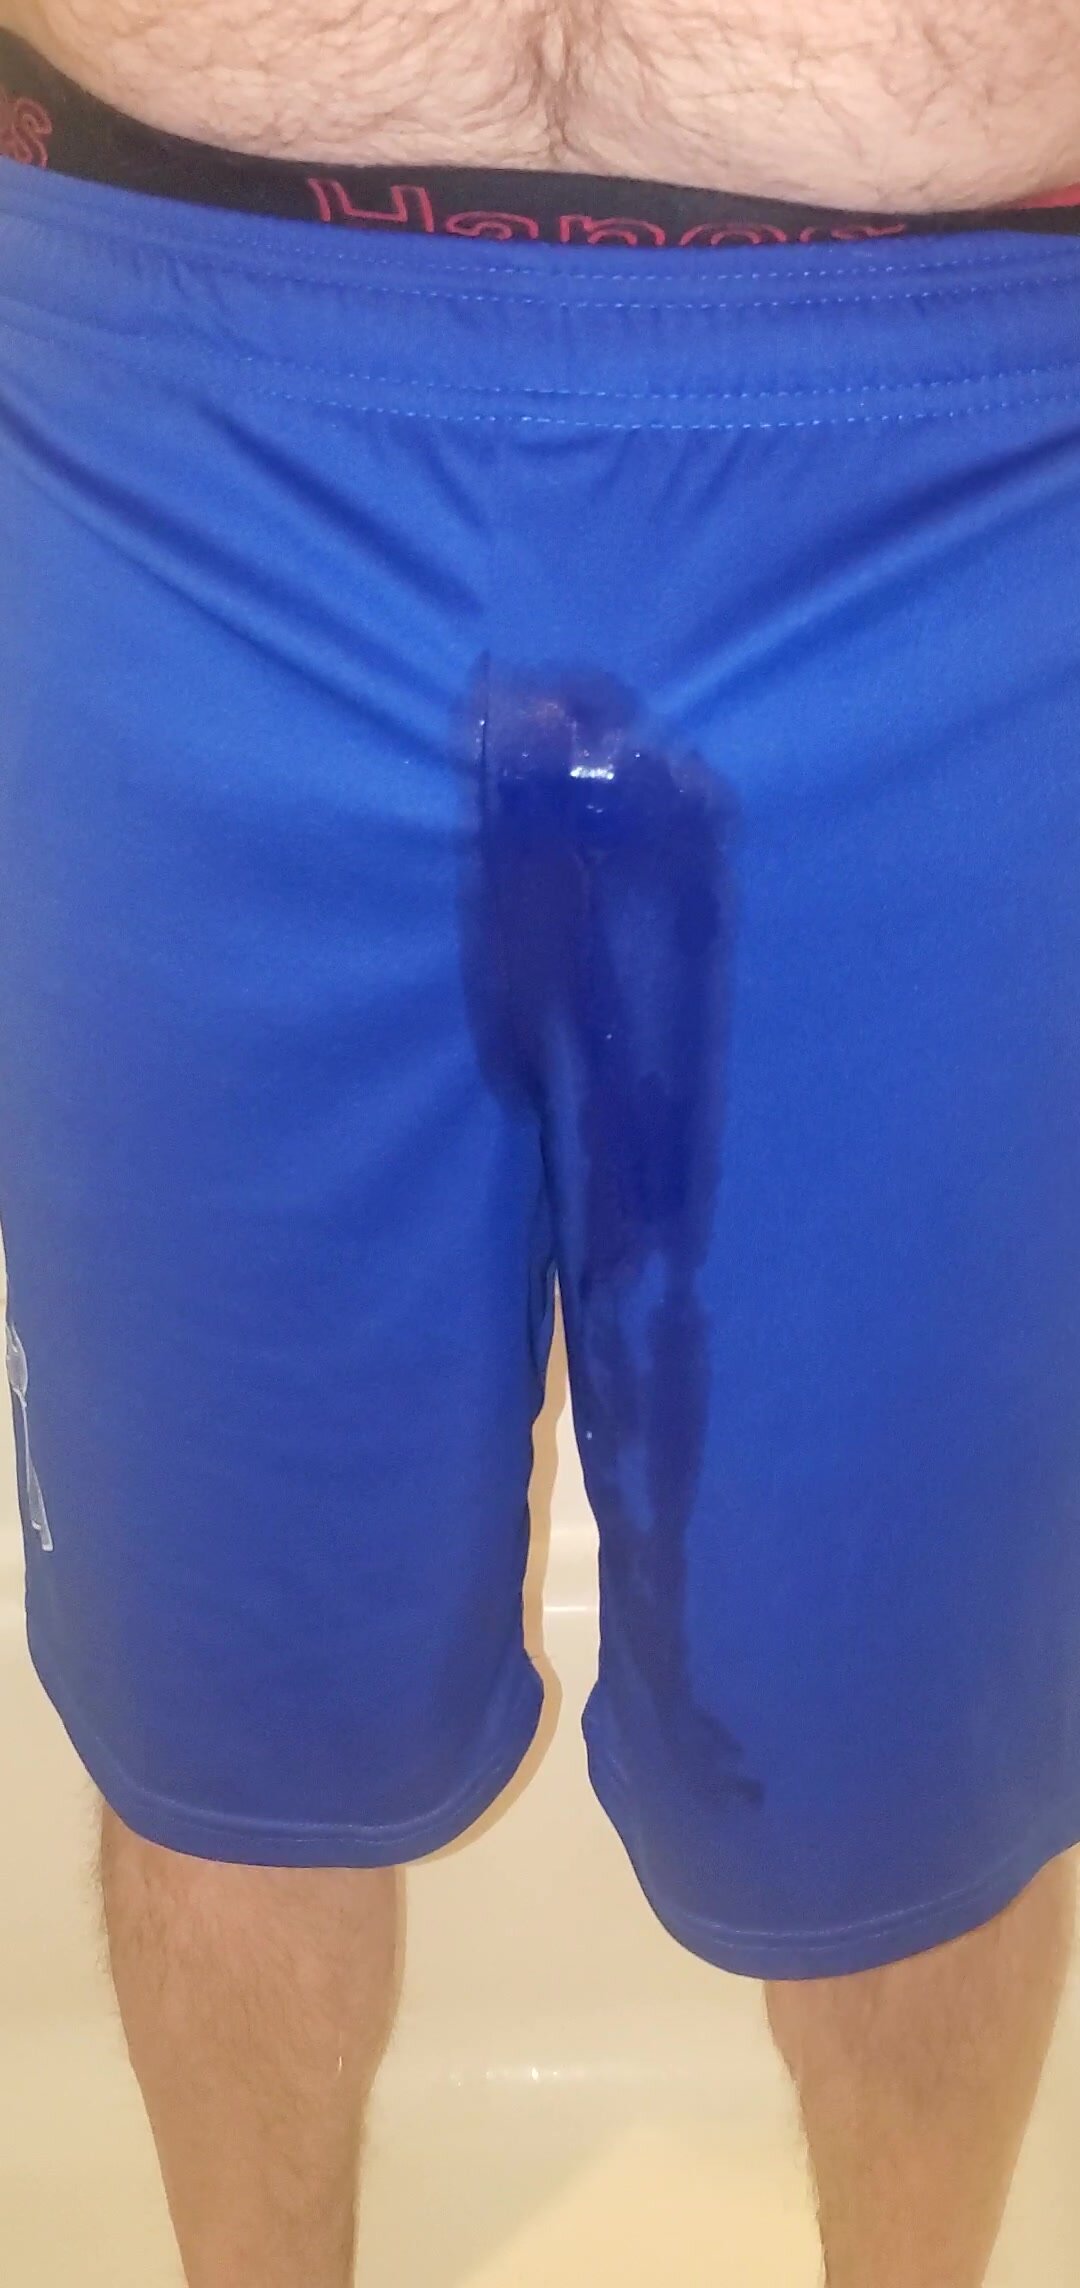 Wetting blue UA shorts and hanes